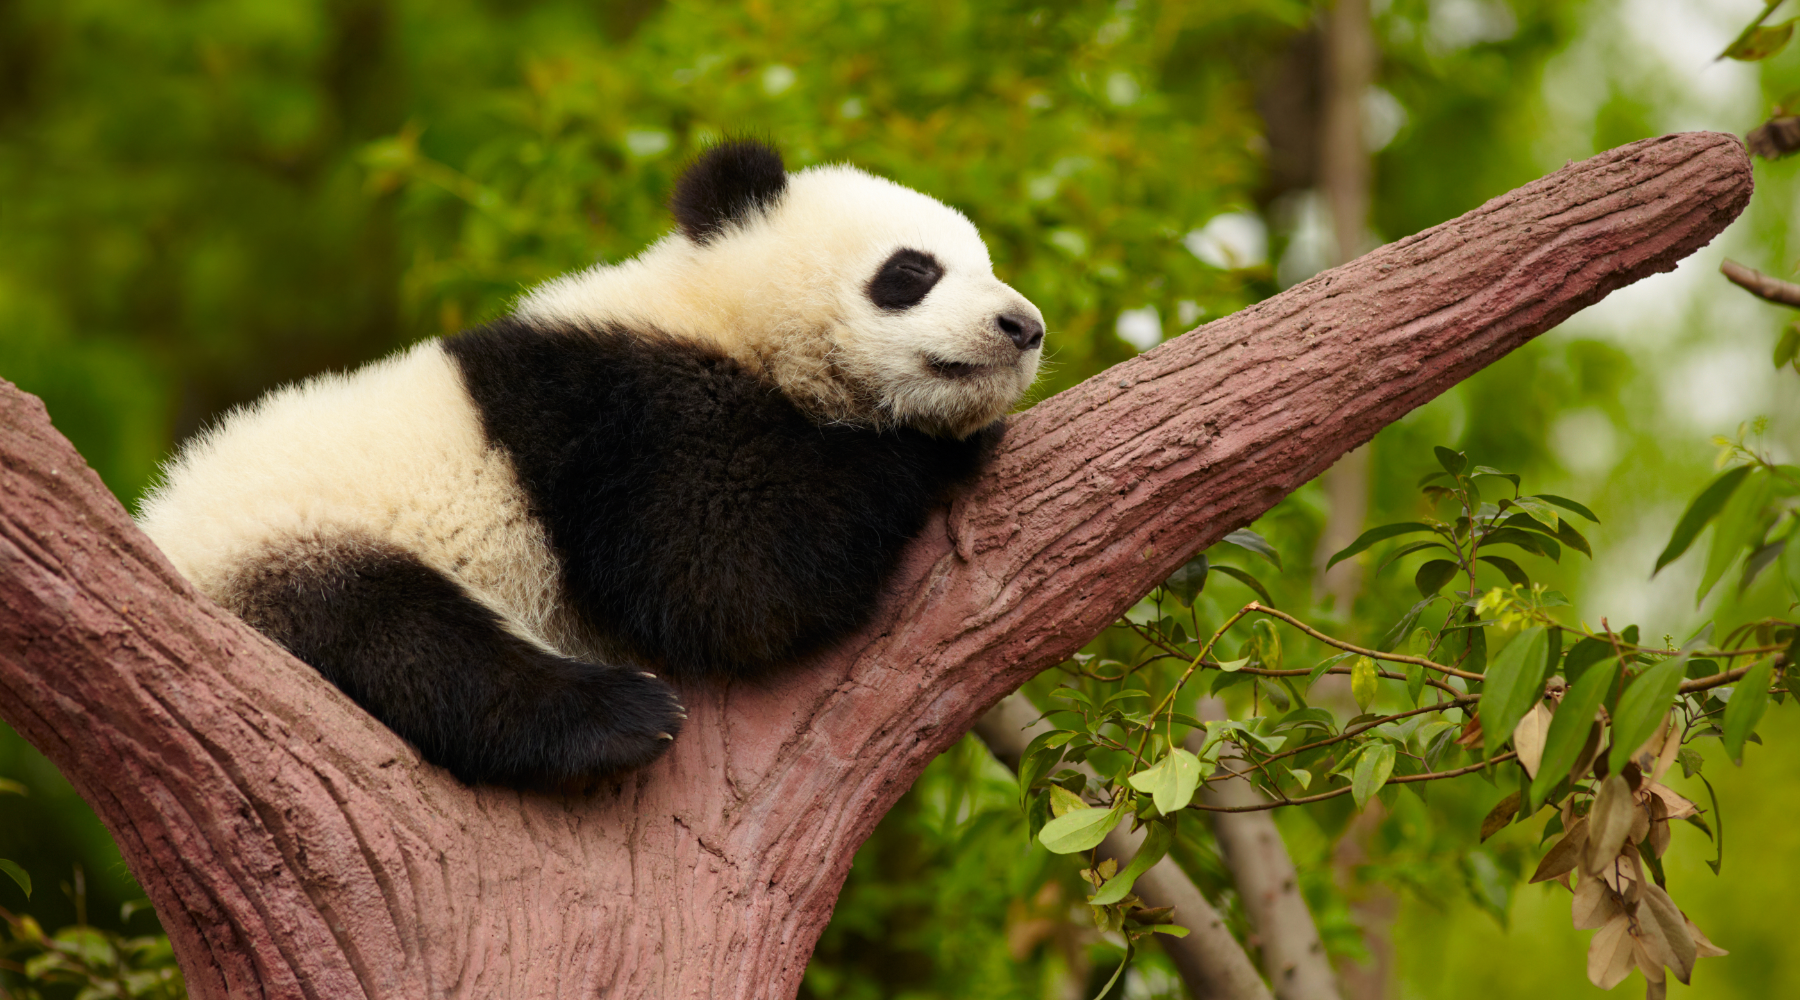 Panda asleep on tree branch